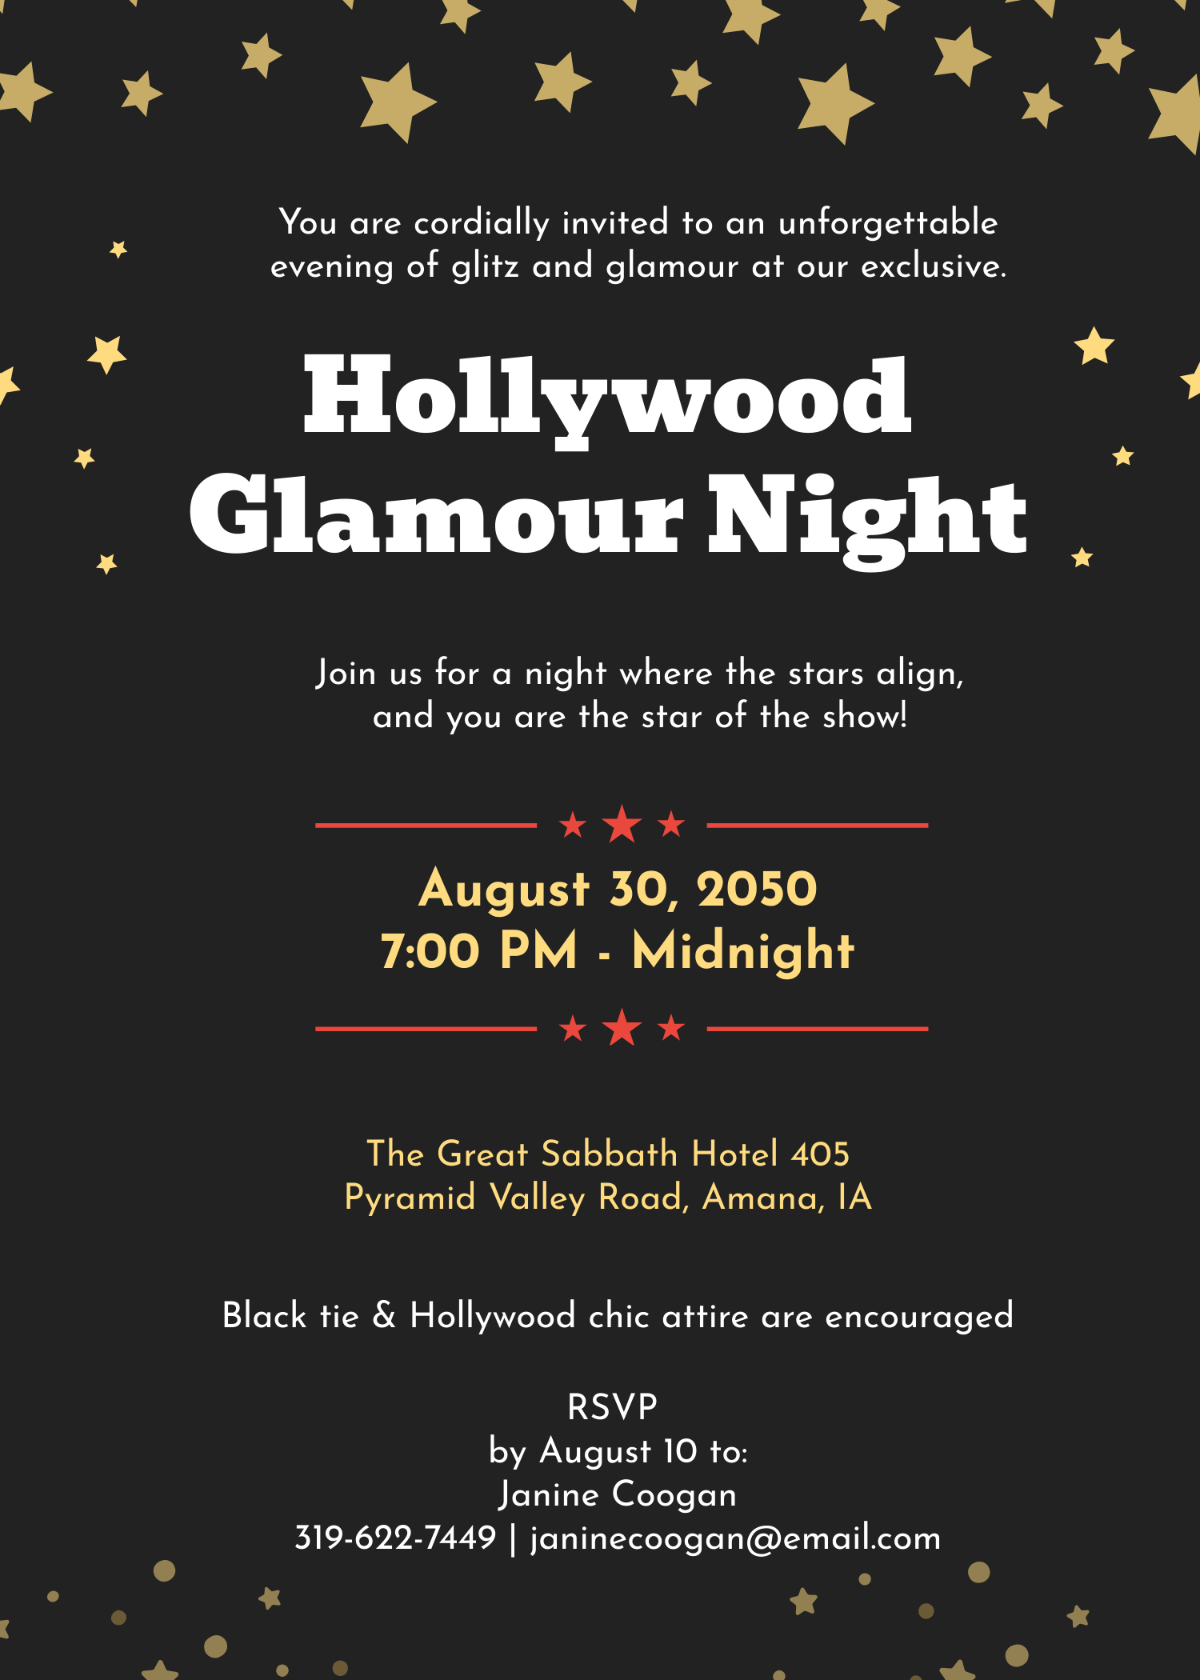 Hollywood Party Invitation